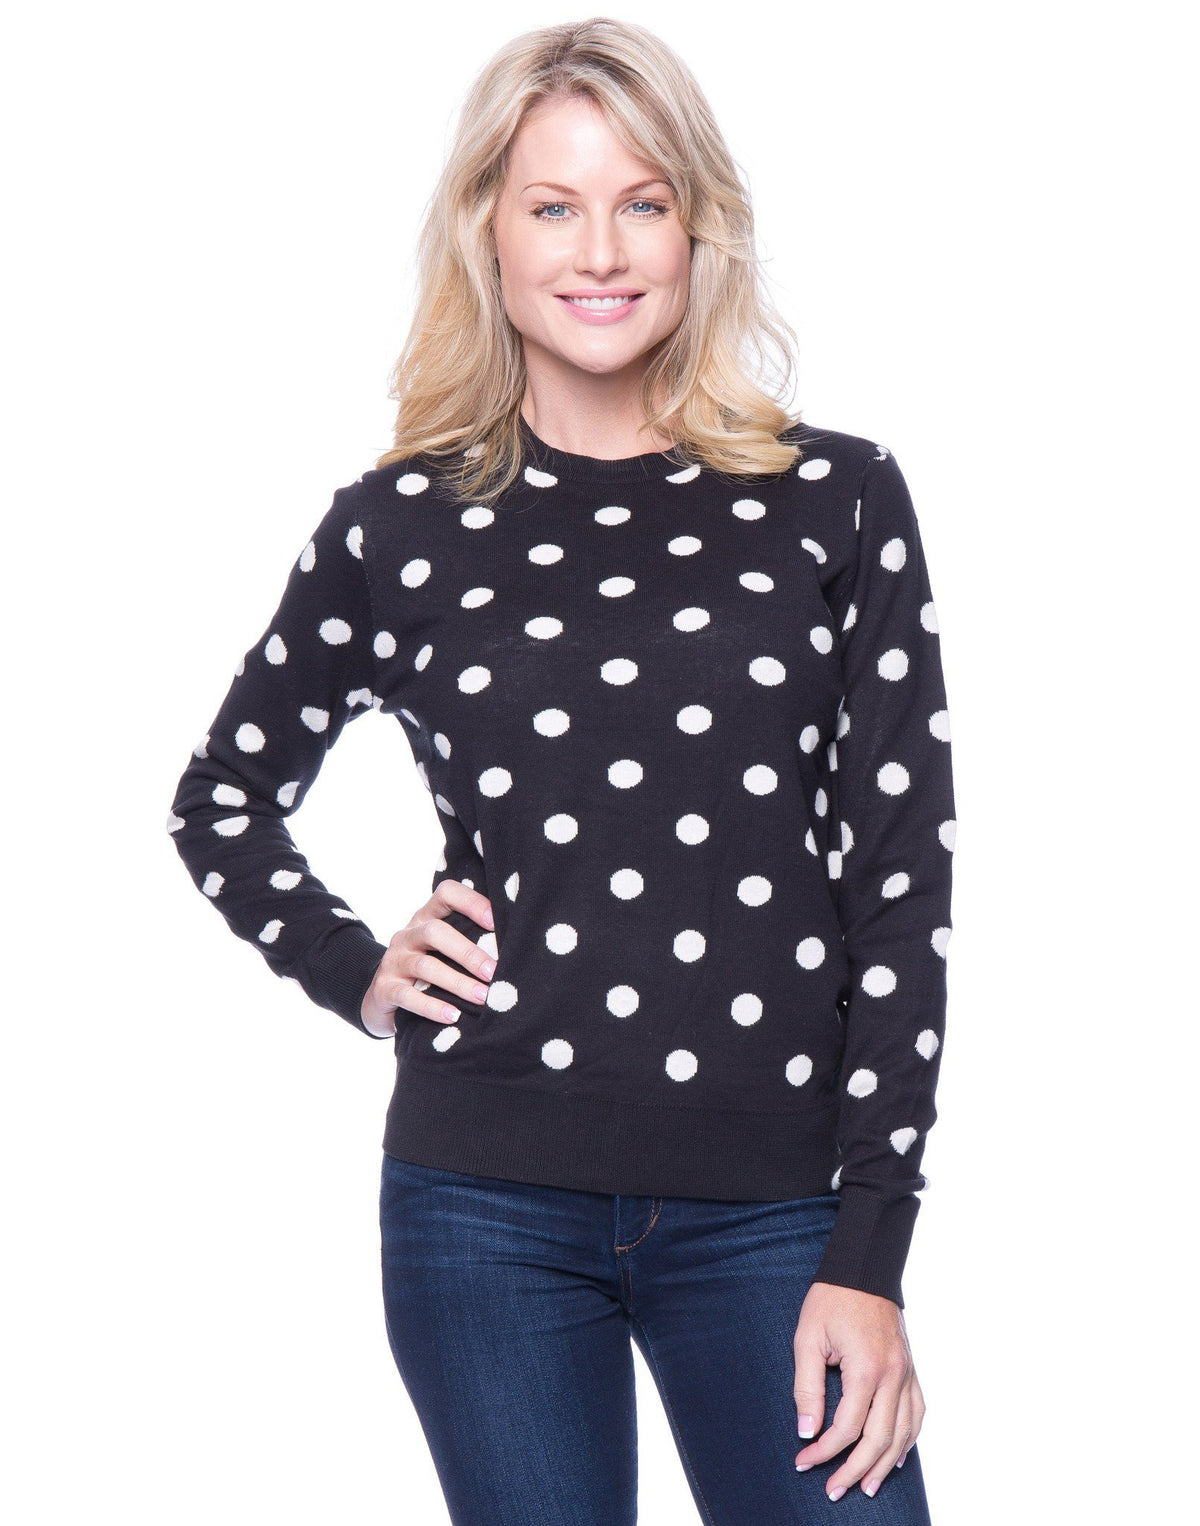 Women's Premium Cotton Crew Neck Sweater - Polka Dots Black/Ivory